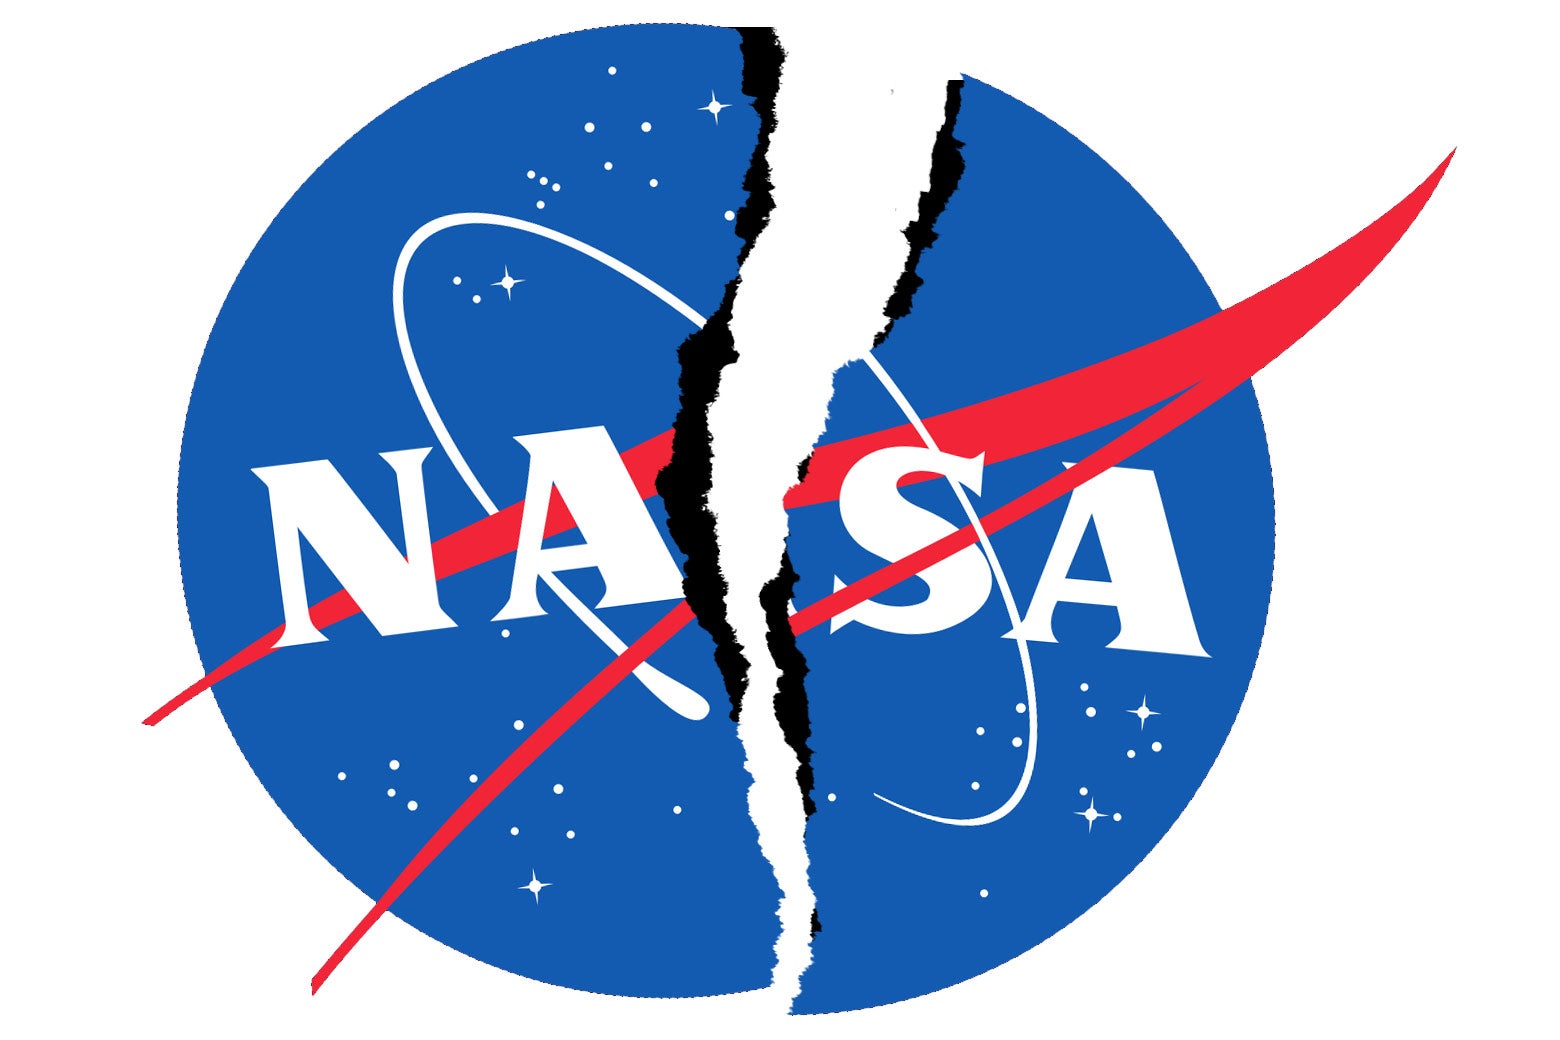 The NASA logo, ripped down the center.